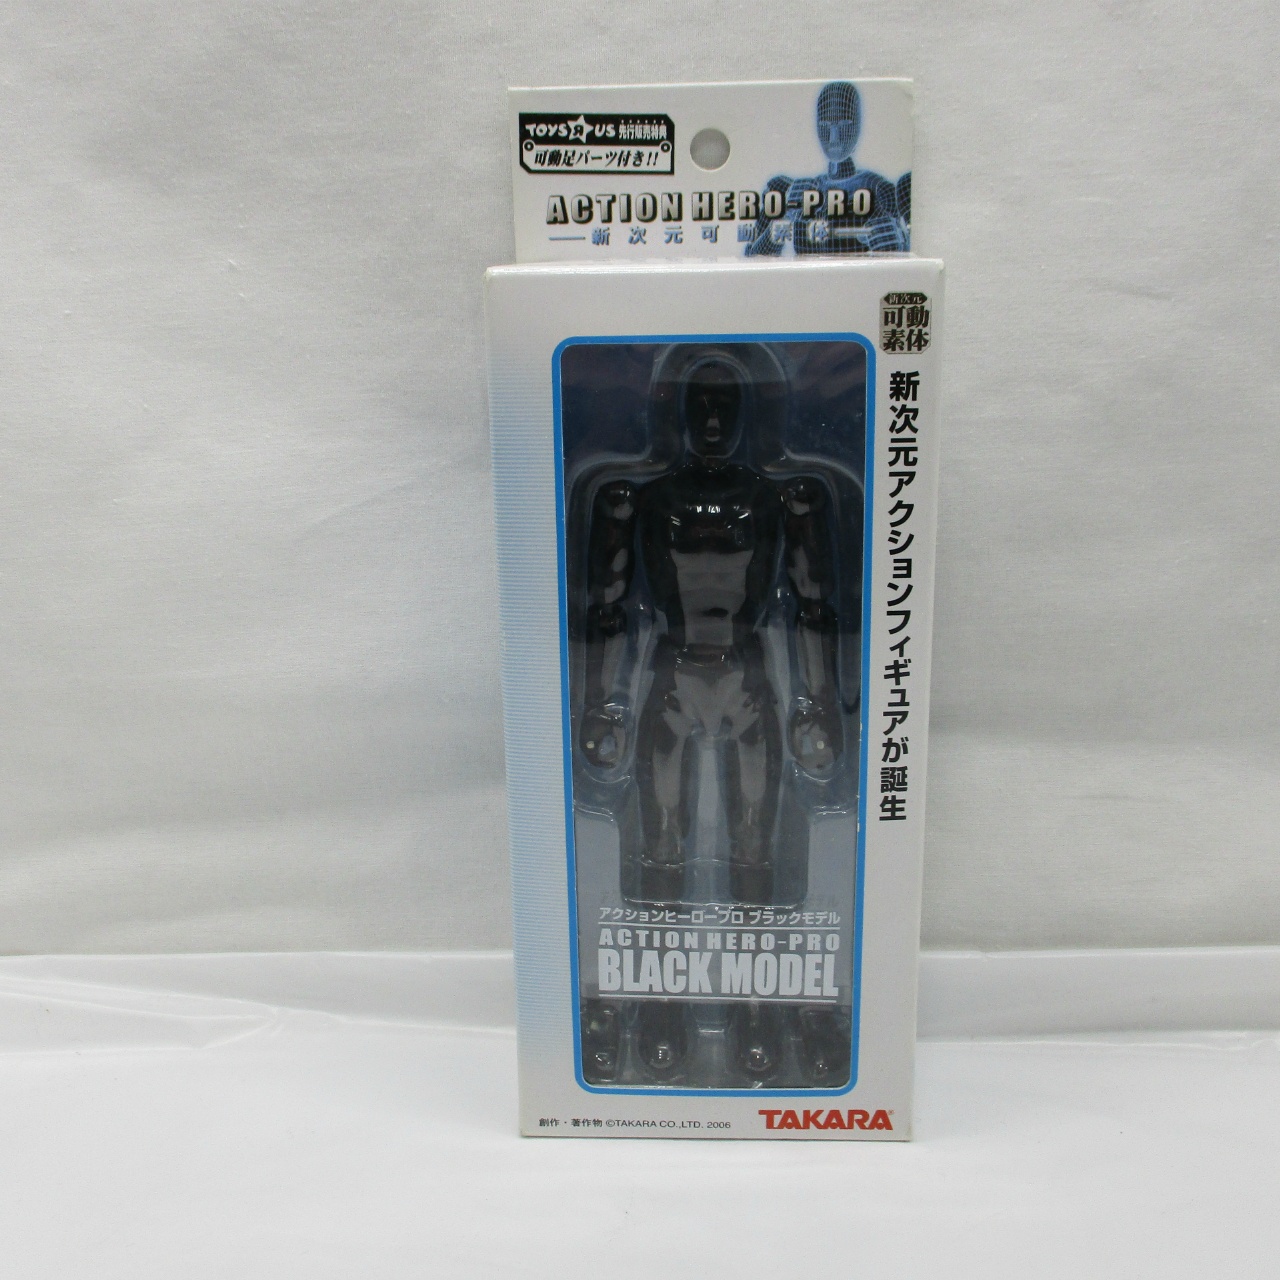 TAKARA Action Hero Pro Black Model Action Figure Body